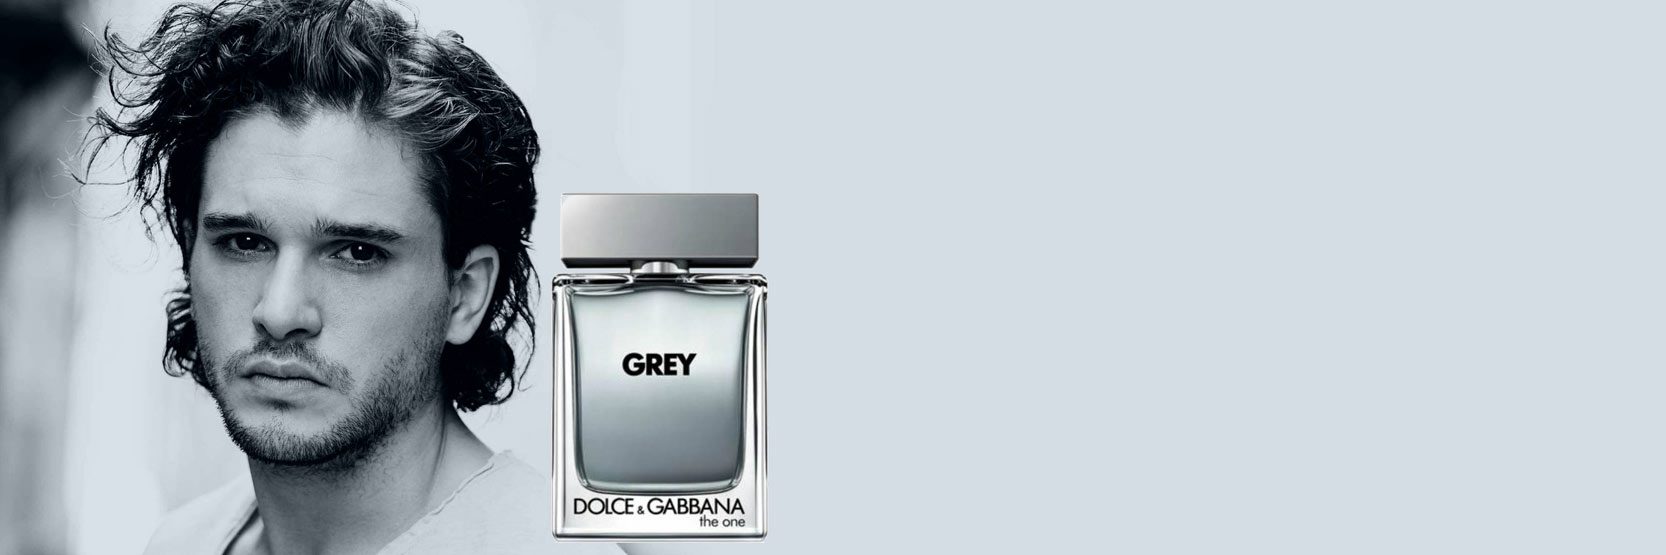 Dolce & Gabbana وعطرها الجديد